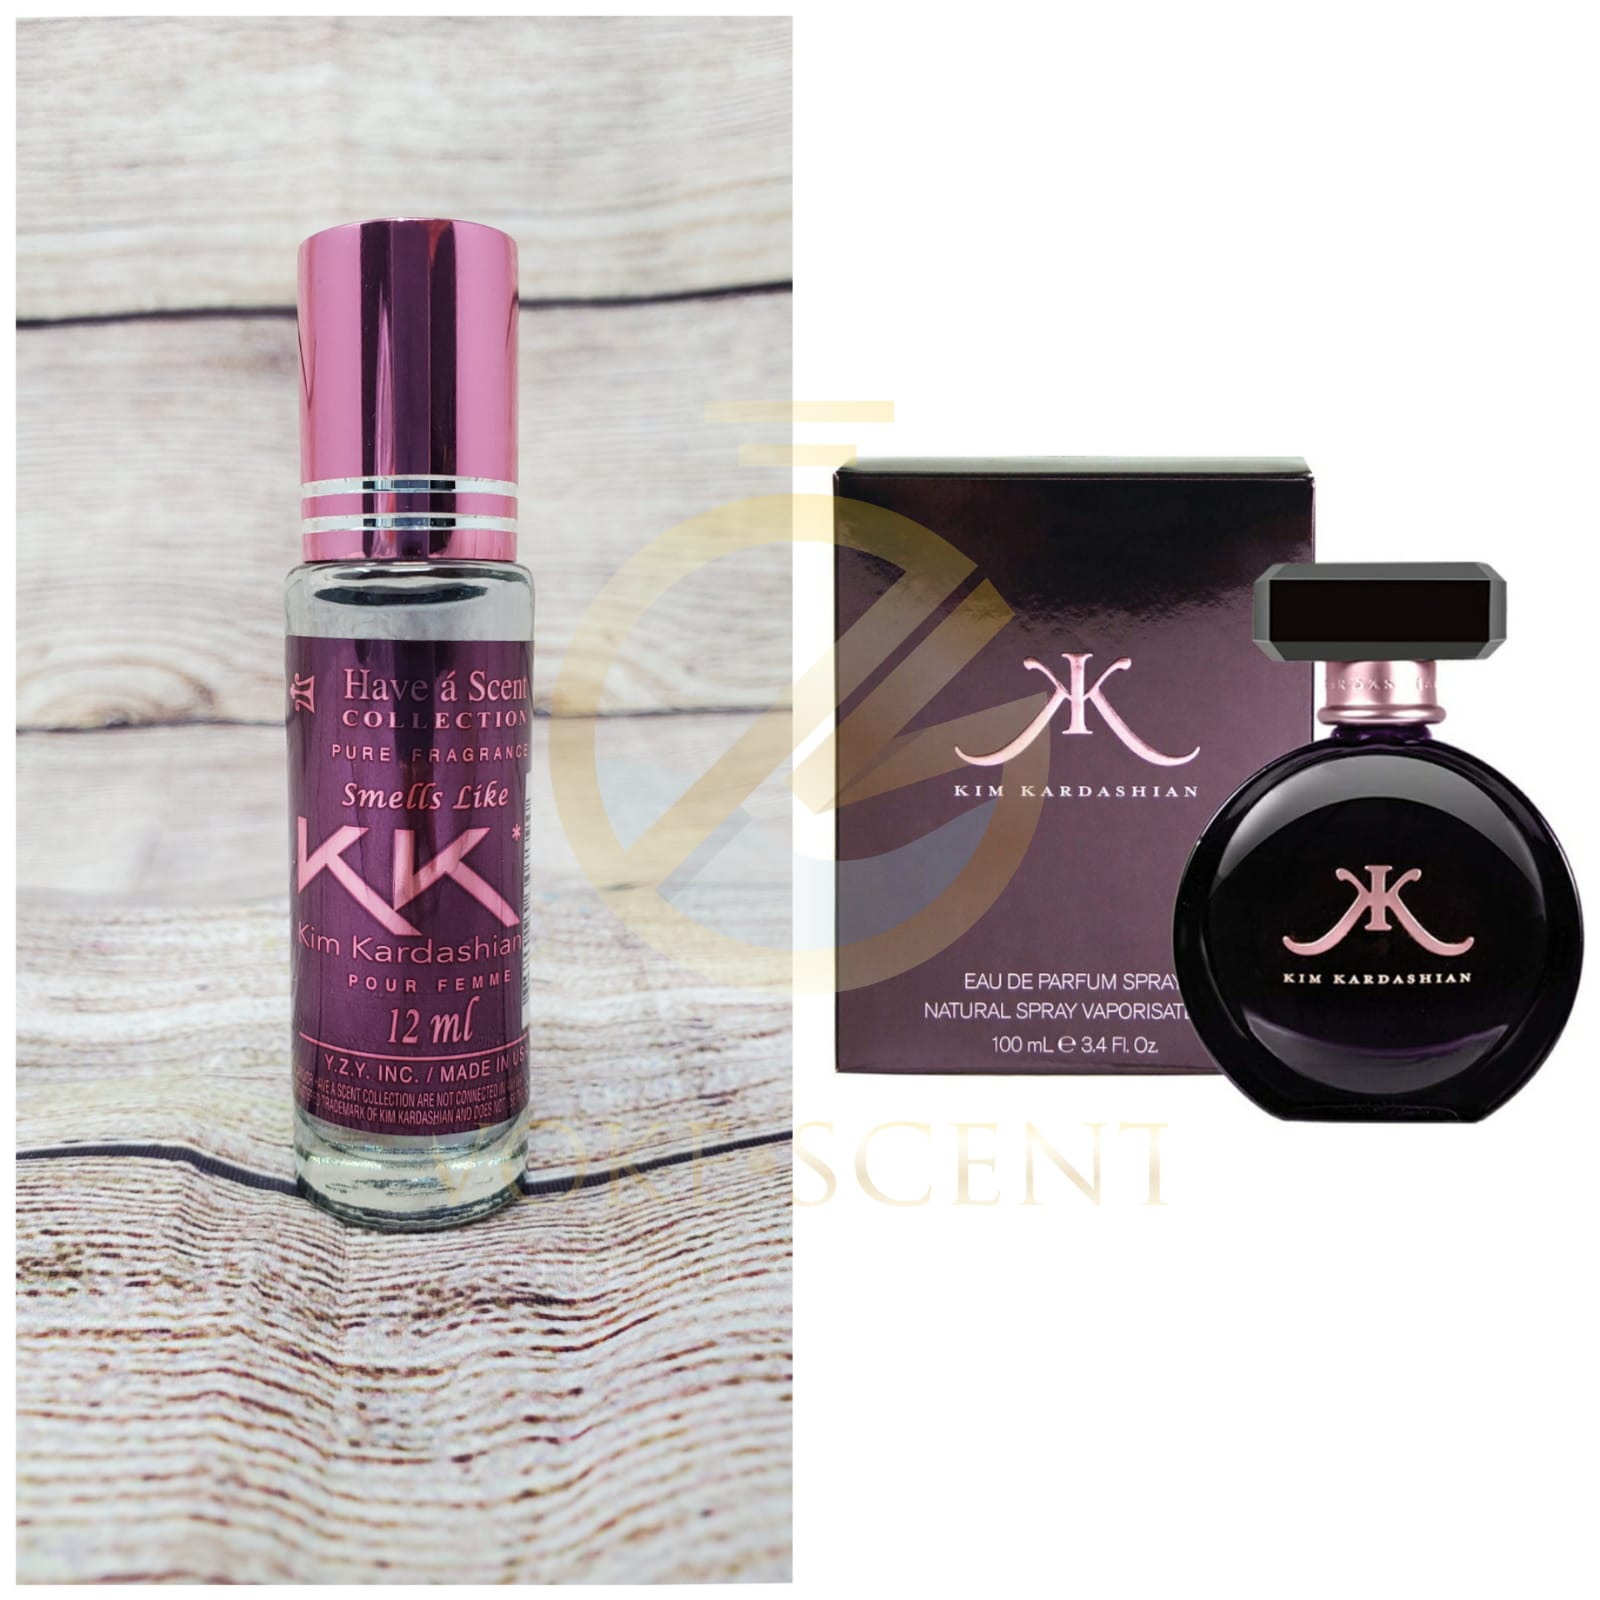 Viva la Juicy Roll-On Oil Perfume For Women 12ml Pure Fragrance